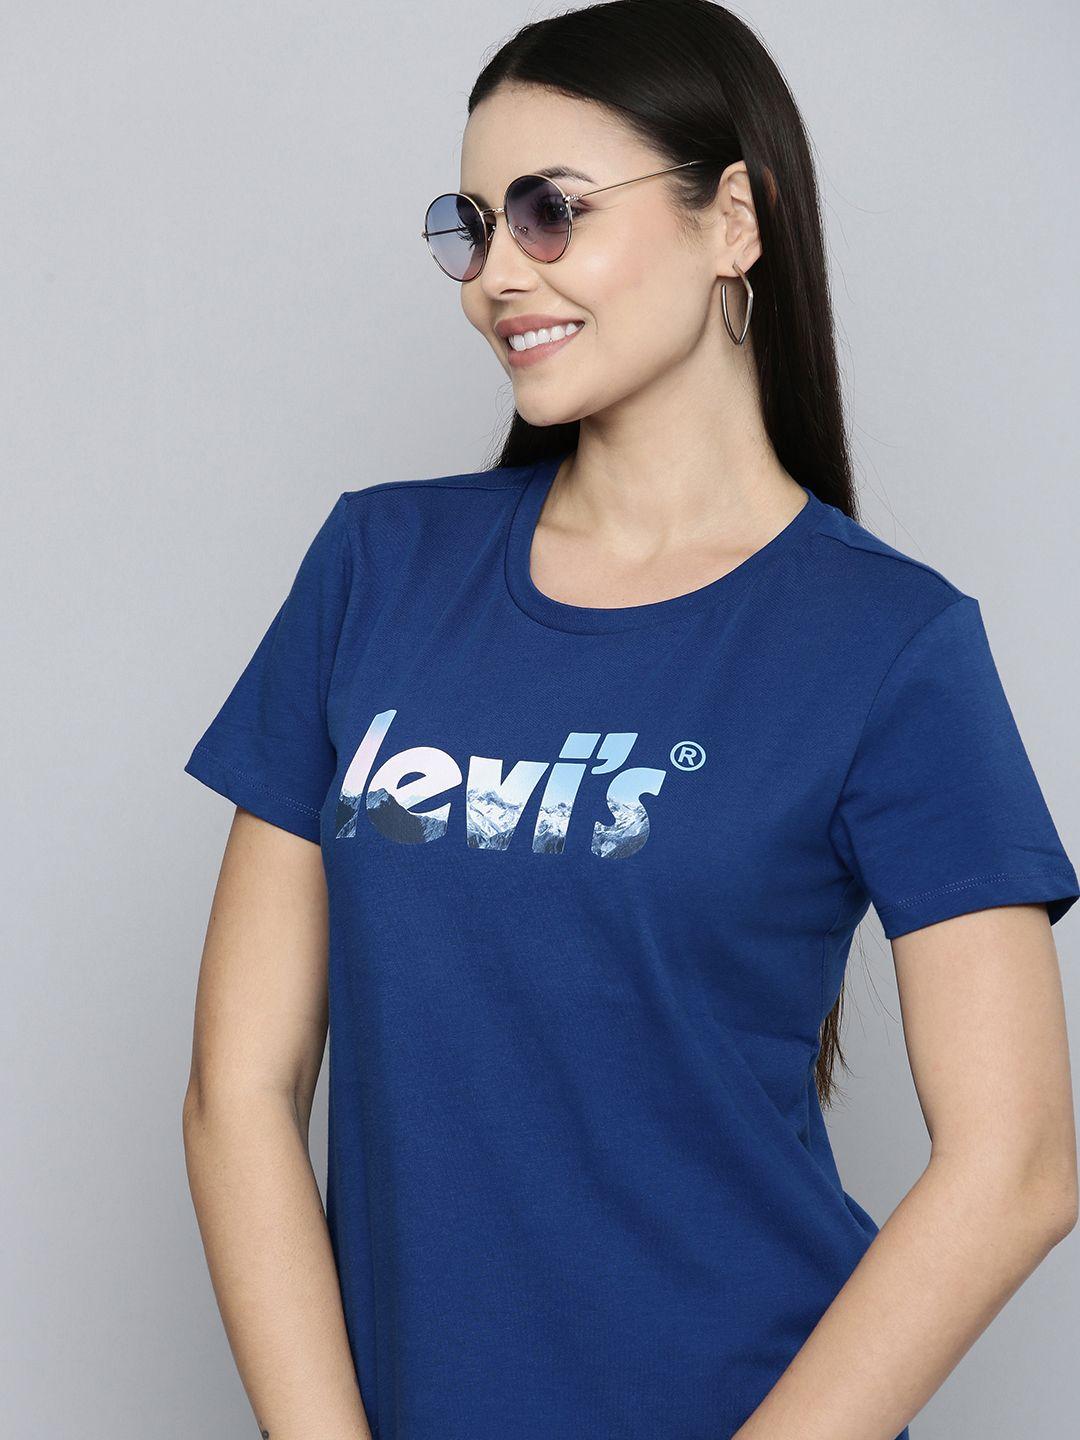 levis women dark blue brand logo printed pure cotton t-shirt